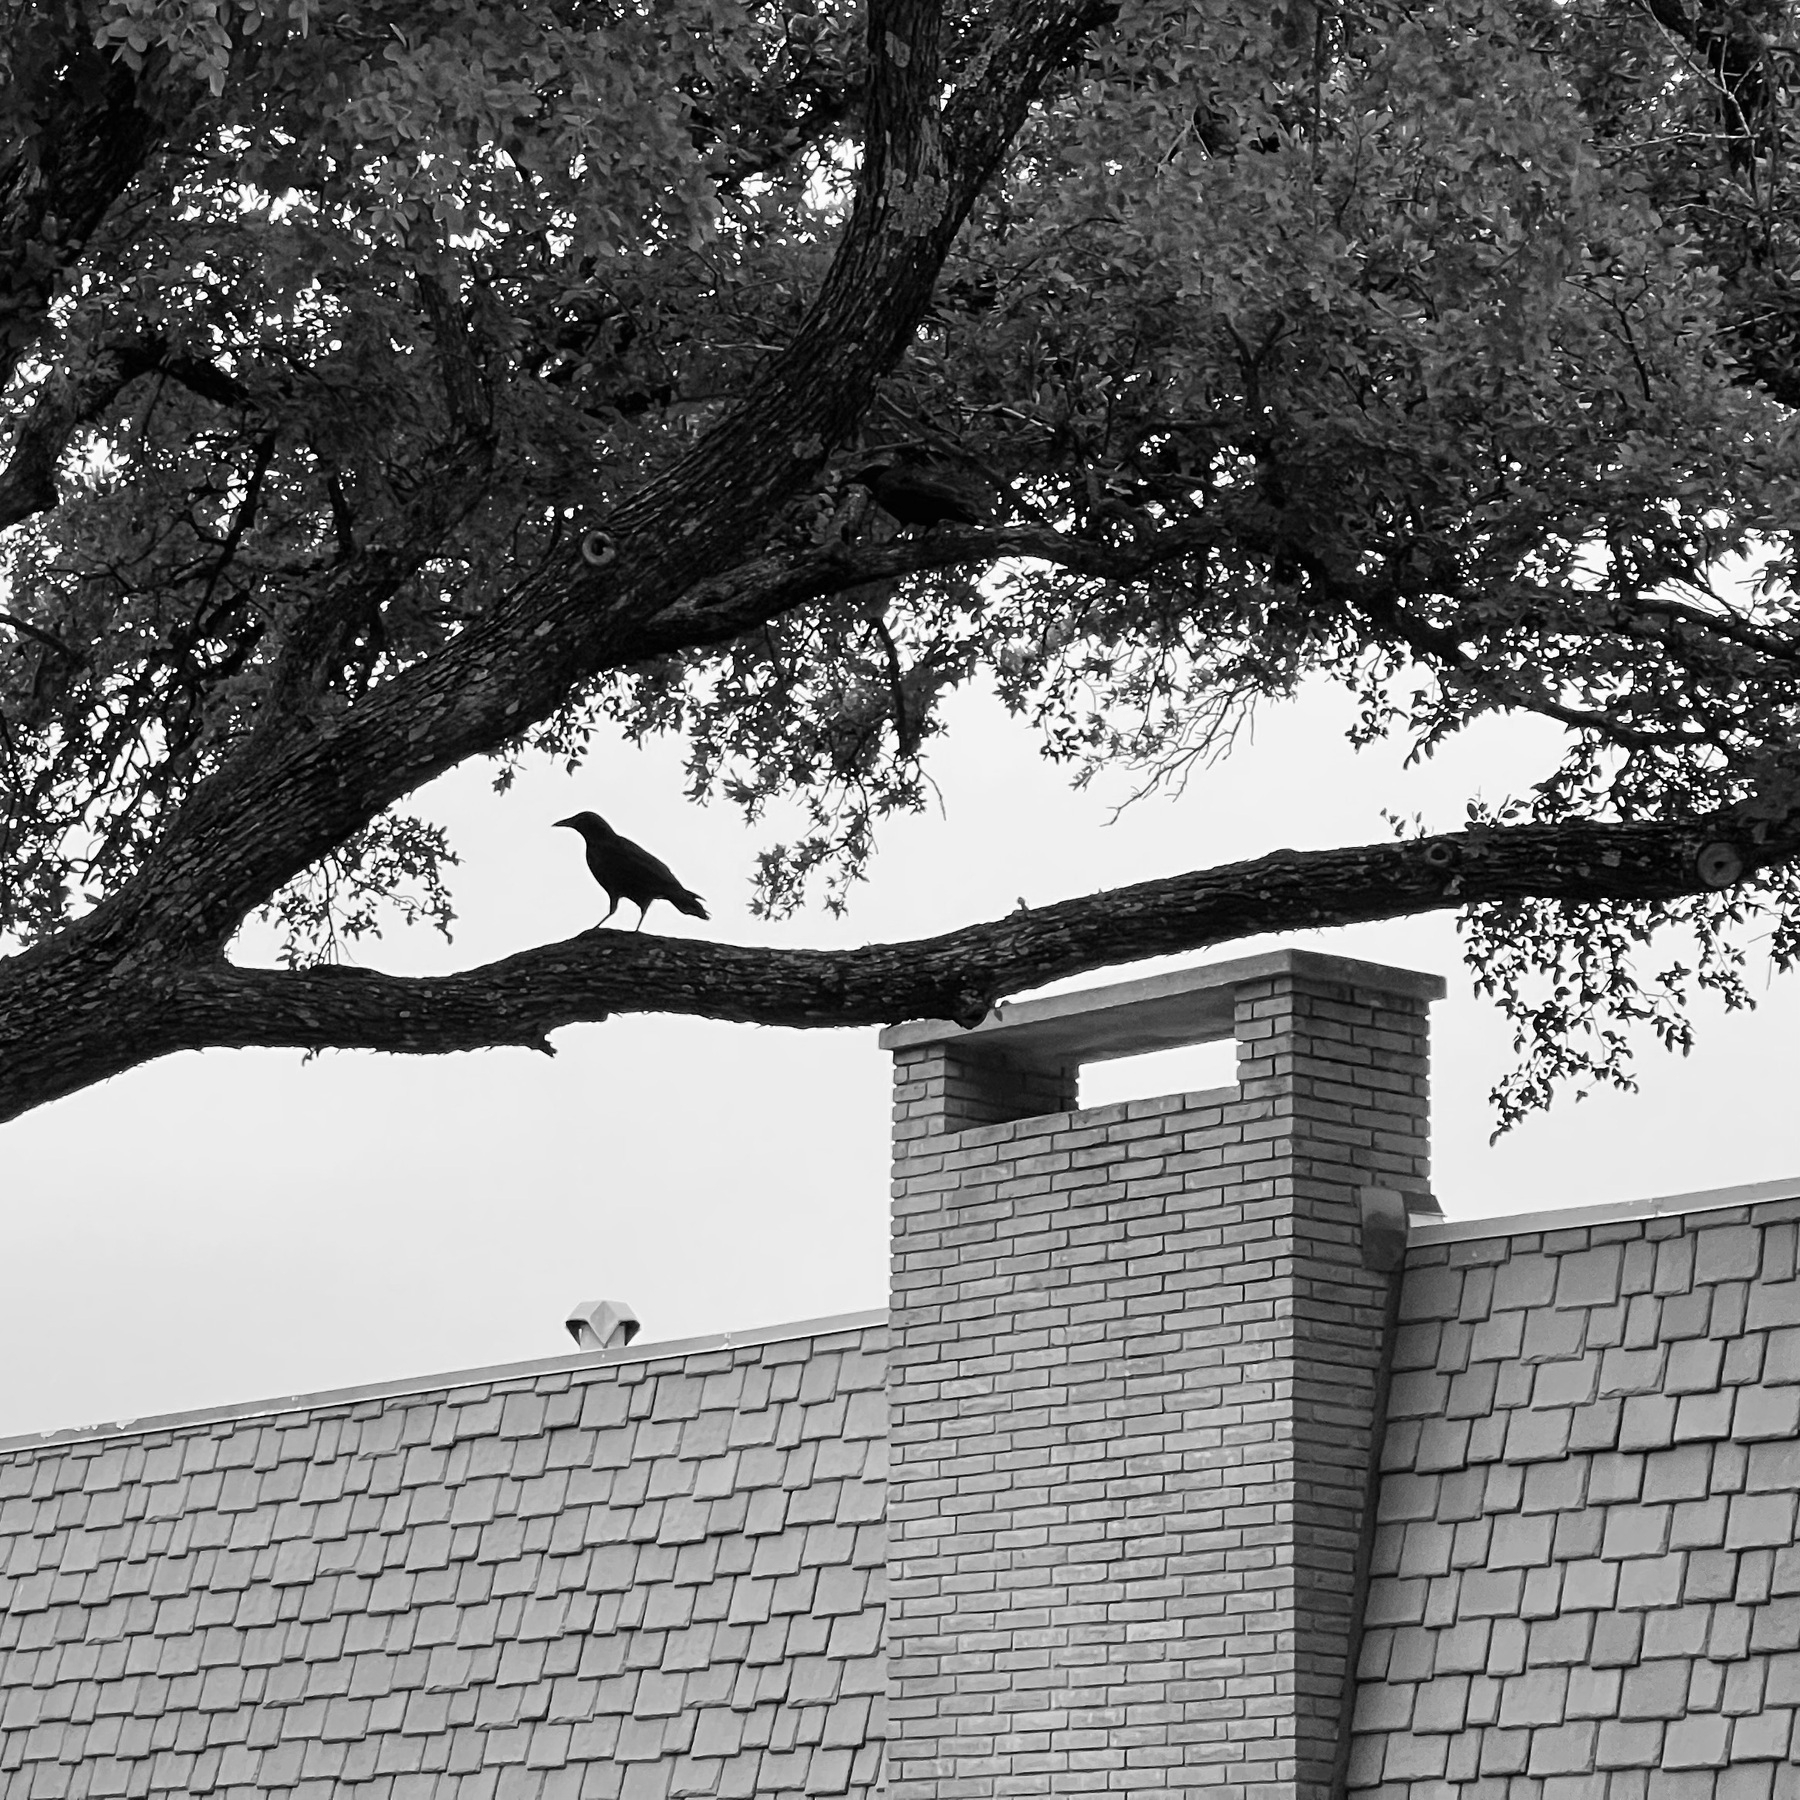 B&W photo of crow on tree branch